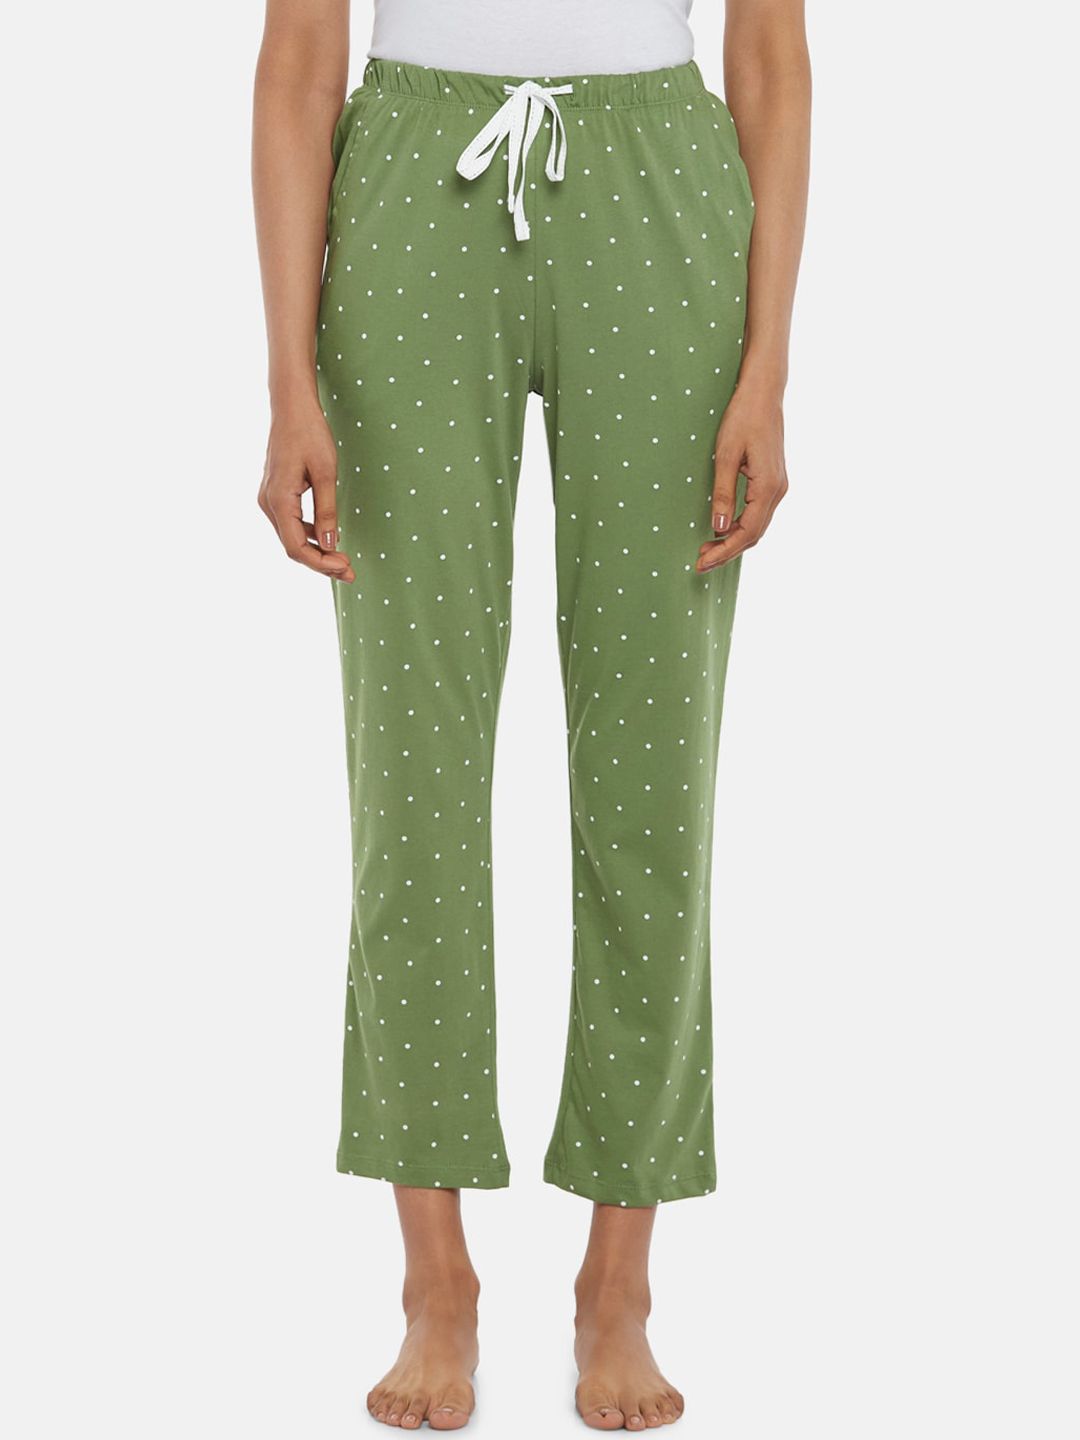 Dreamz by Pantaloons Women Green Polka Dot Cotton Cropped Lounge Pants Price in India